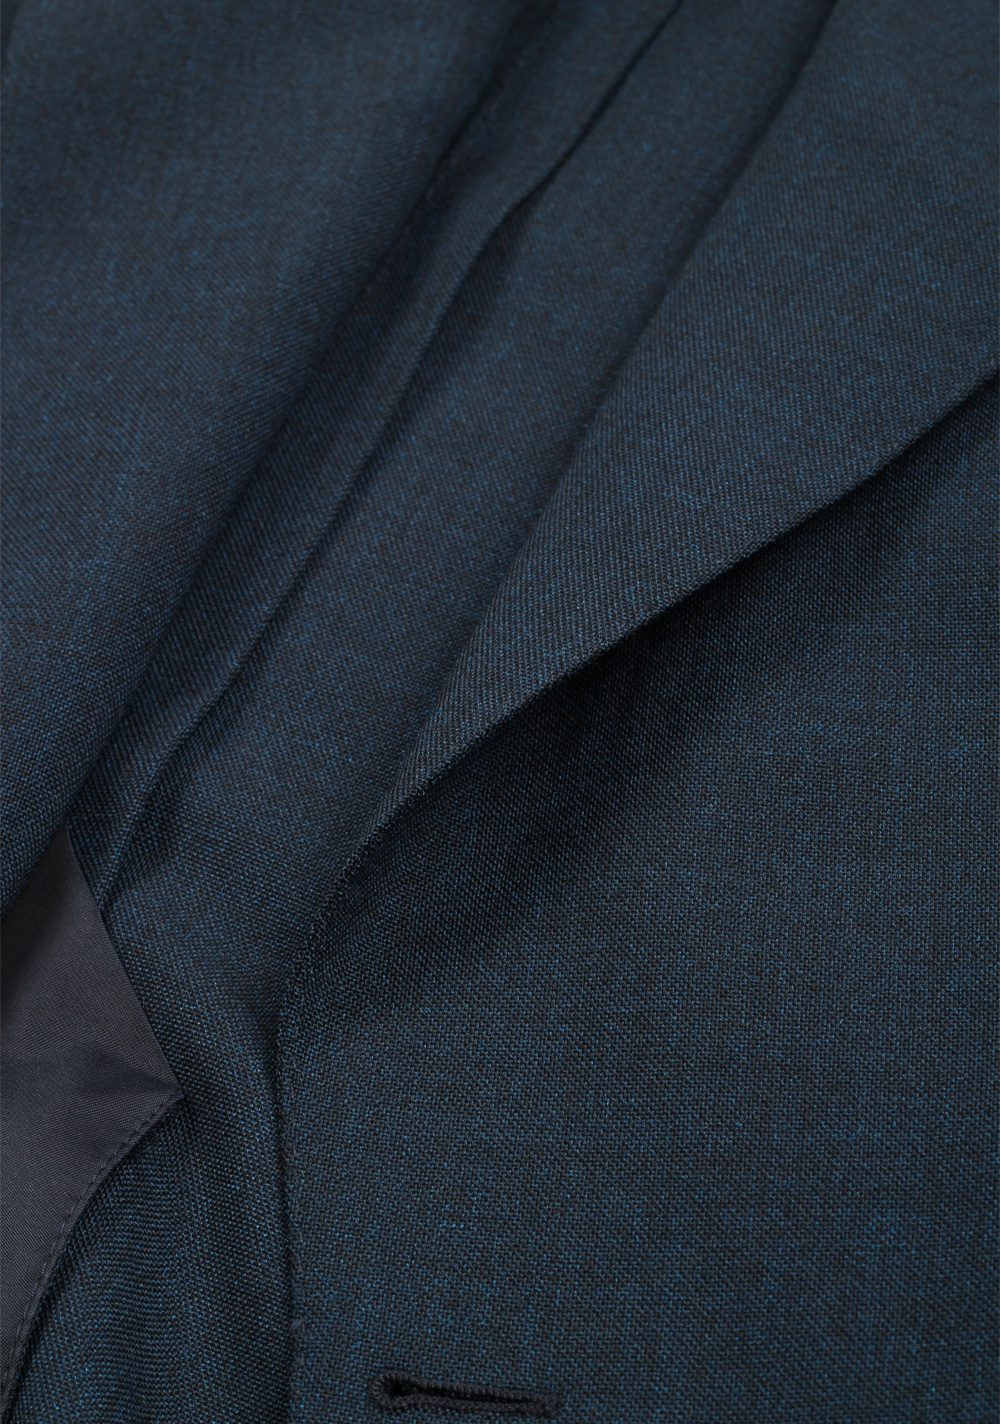 TOM FORD Shelton Blue Suit Size 48 / 38R U.S. In Mohair | Costume Limité